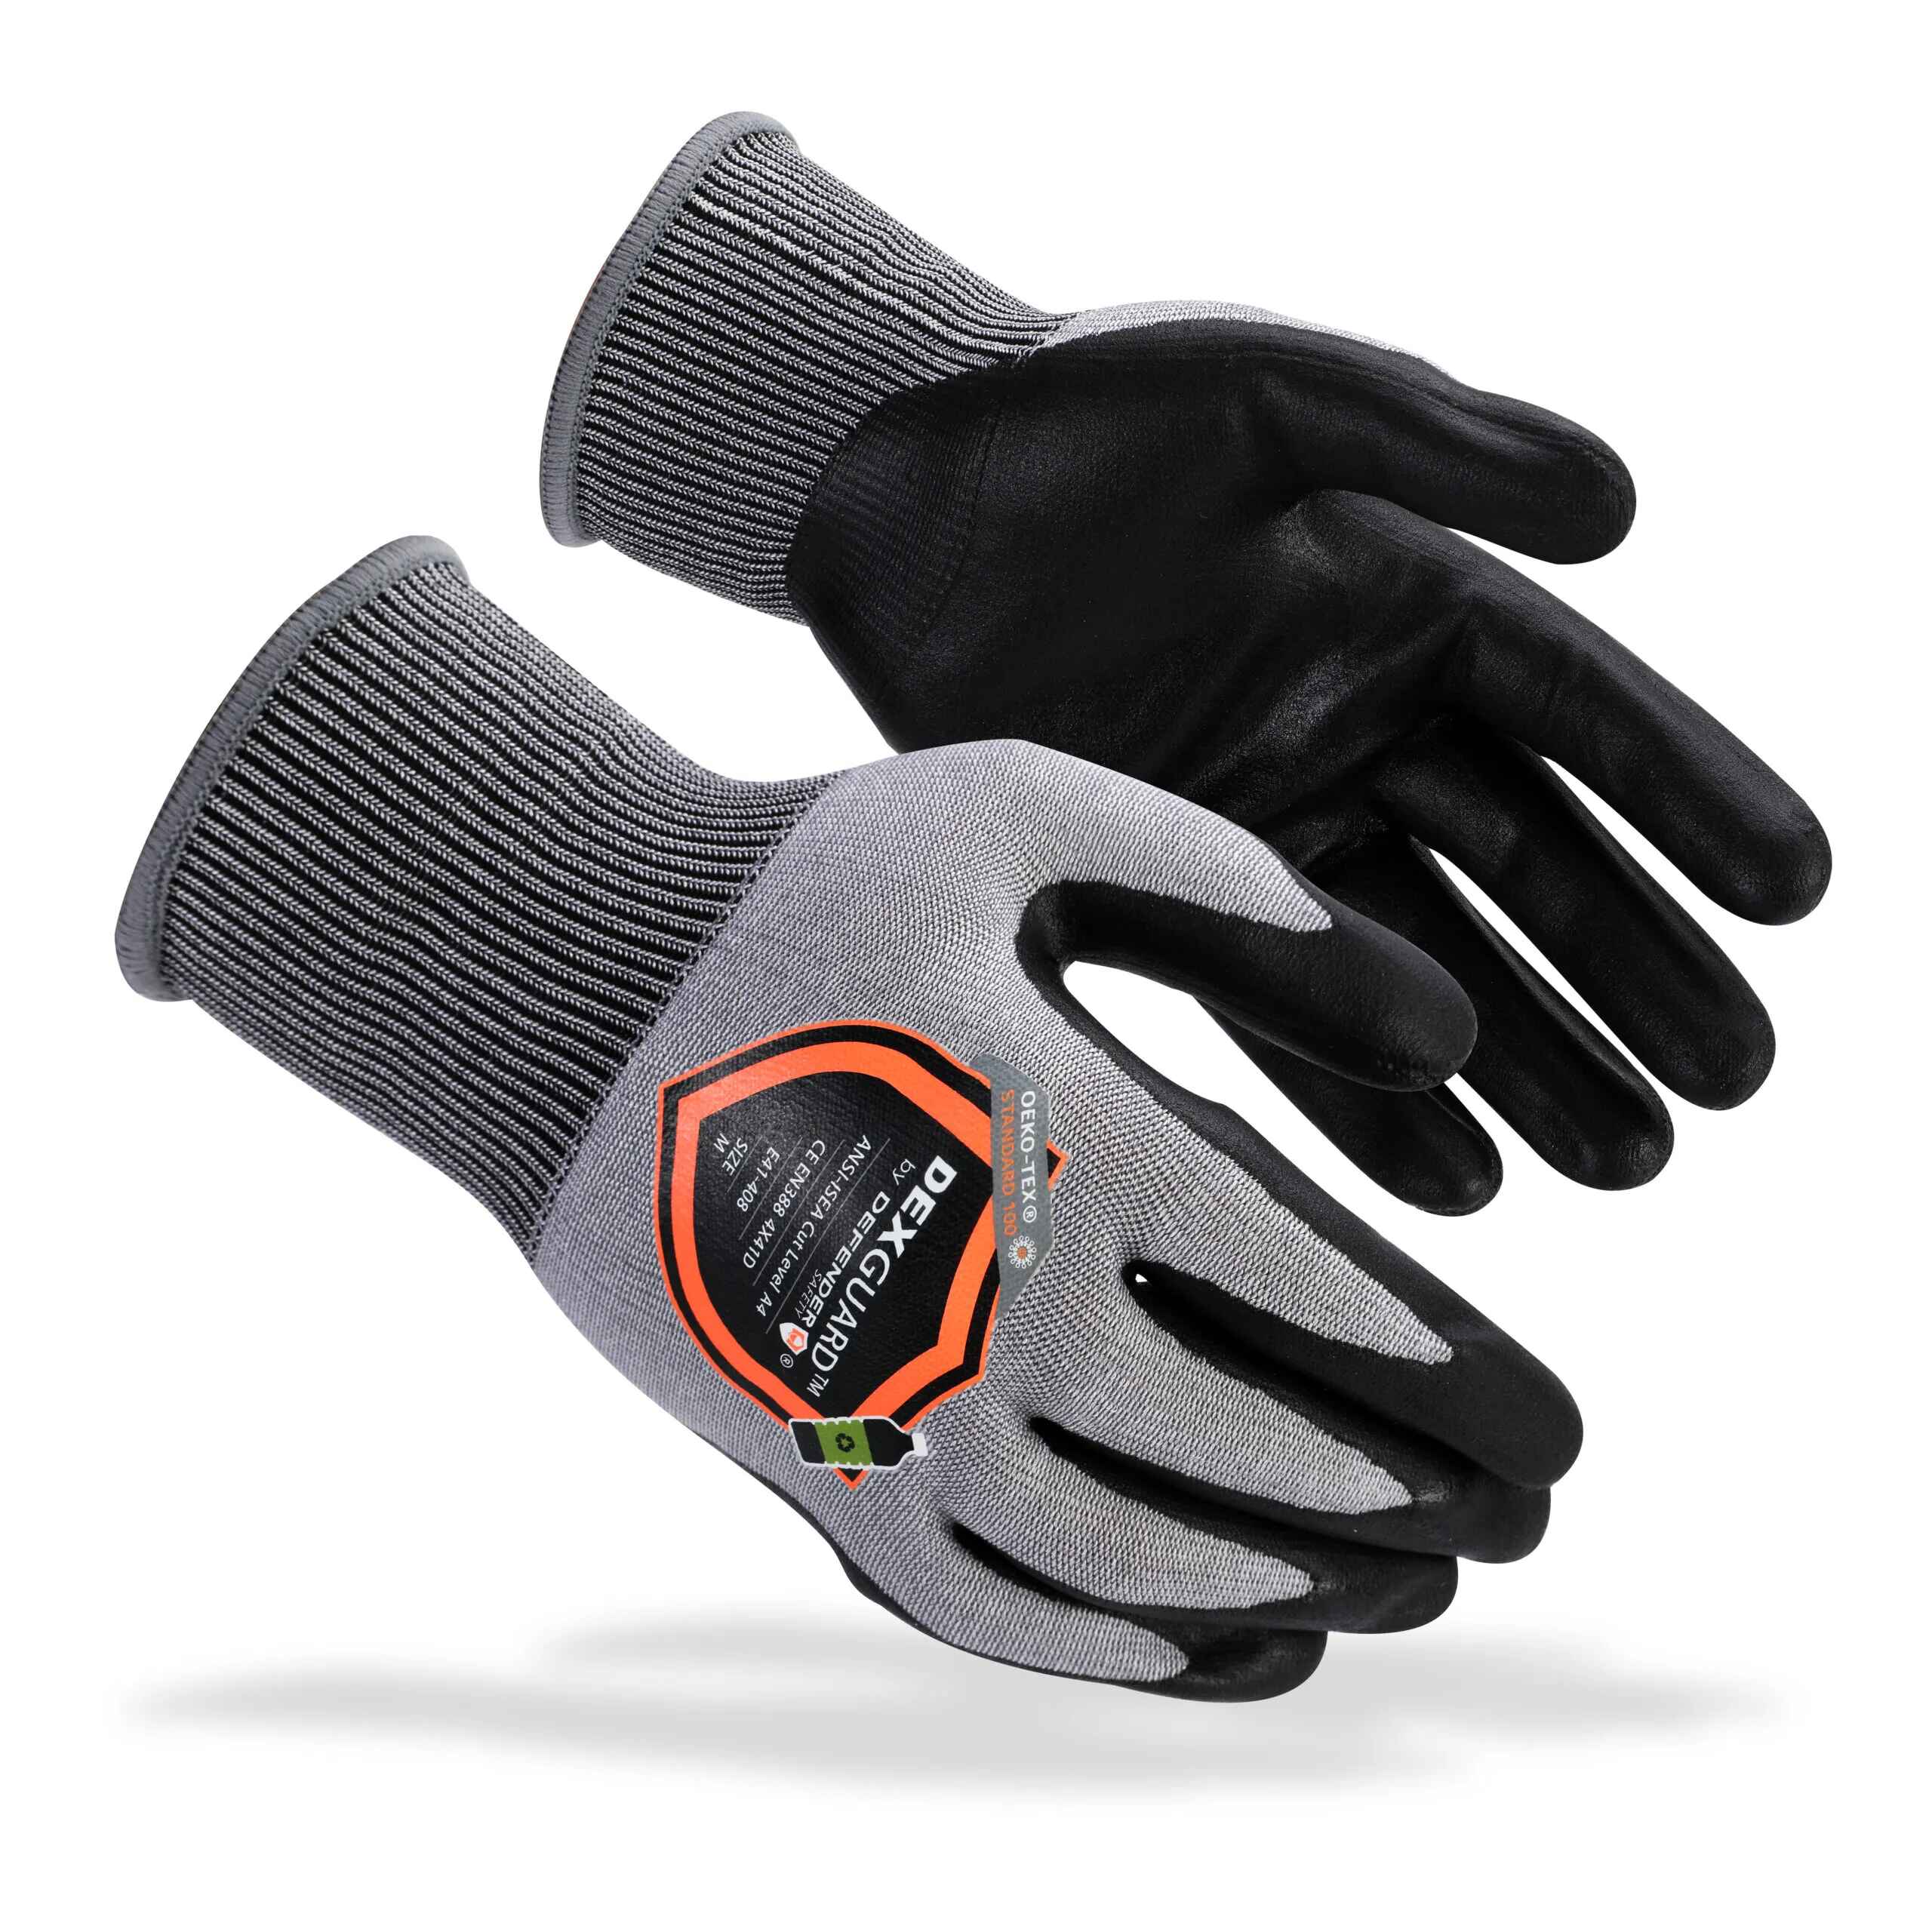 DEXGUARD™ A4 Cut Gloves, Level Abrasion Resistant, Foam Nitrile Coat